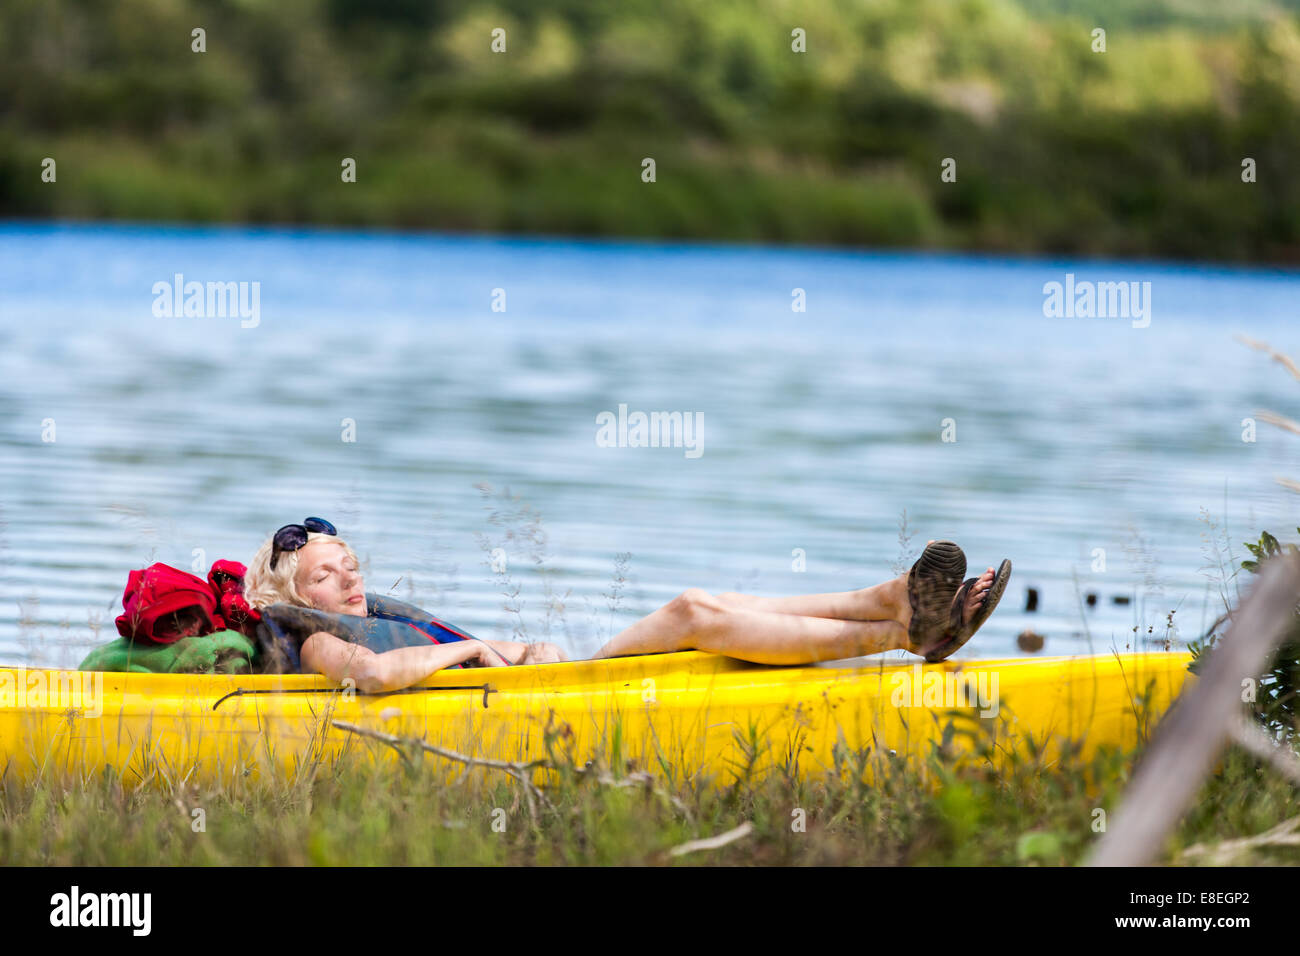 Tired Woman Sleeping in a Yellow Kayak Stock Photo